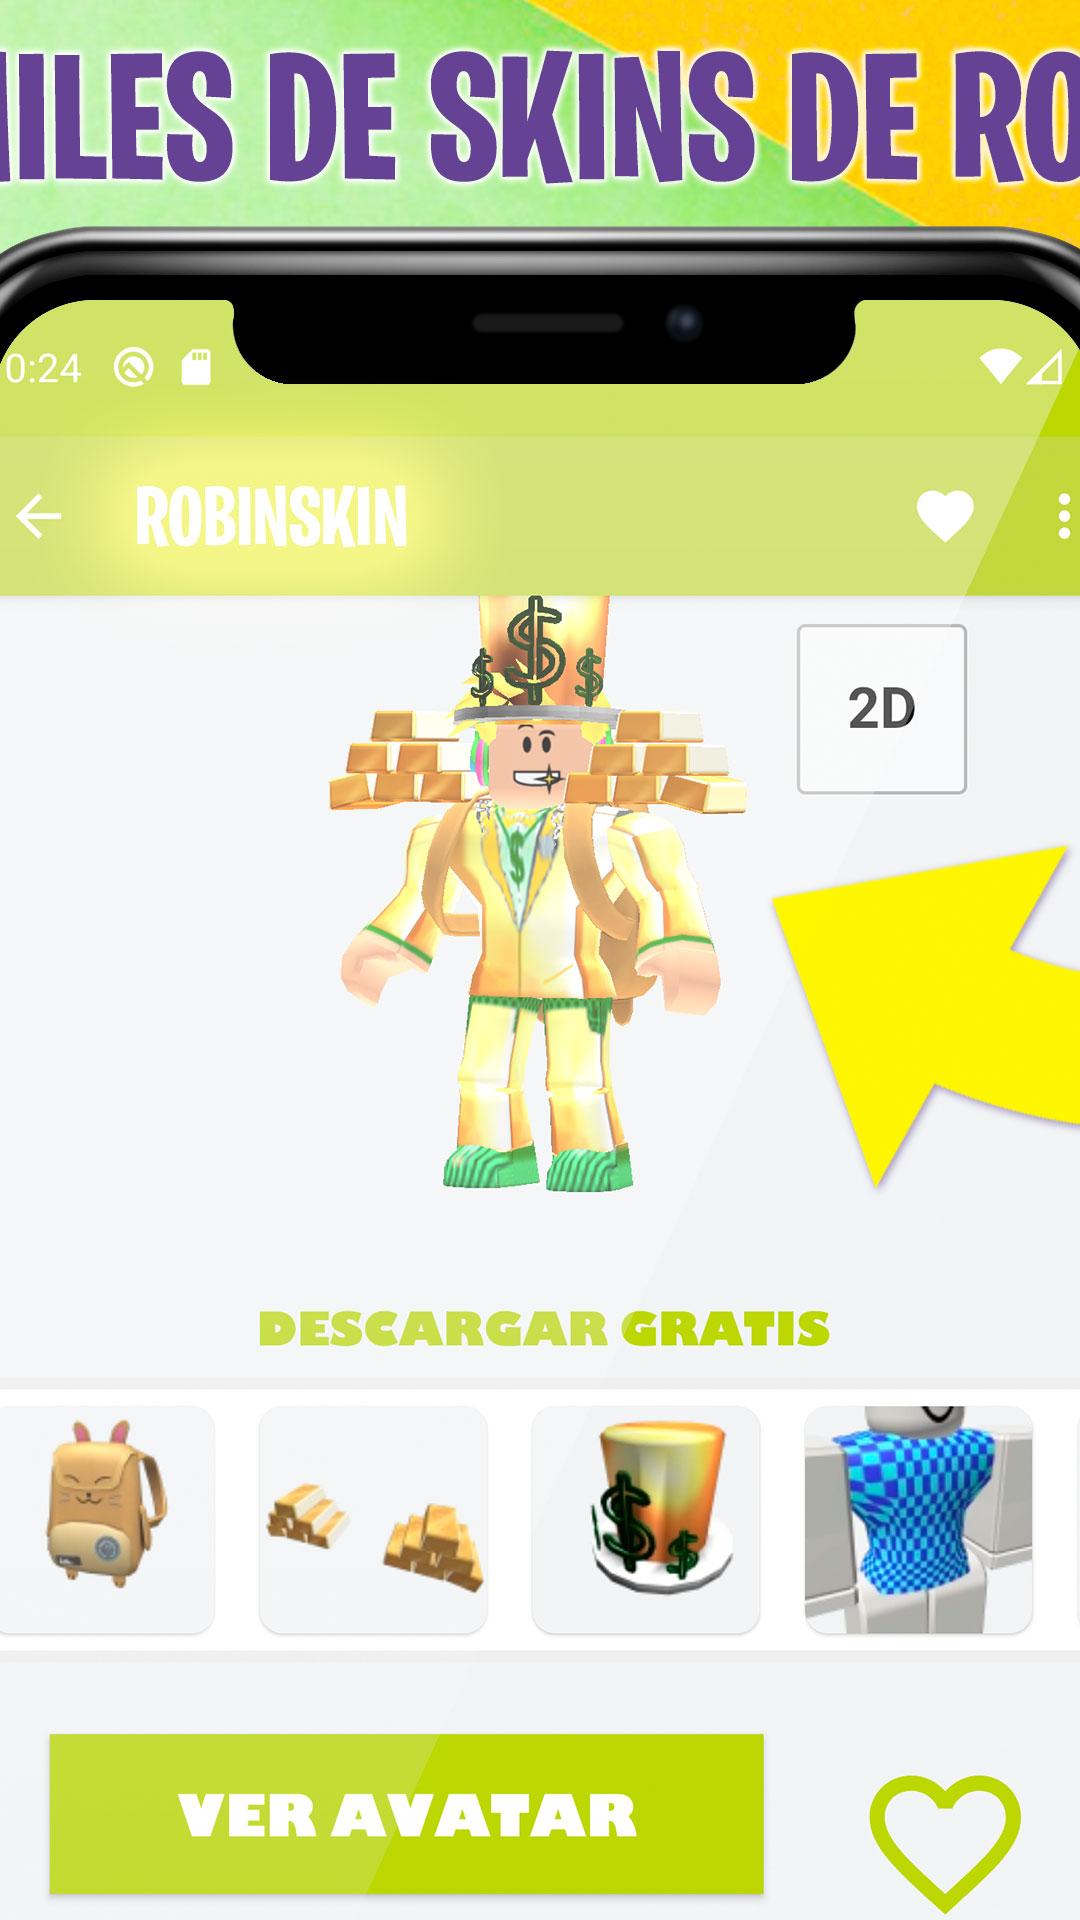 Mis Skins De Roblox Sin Robux Gratis Robinskin For Android Apk Download - skins de roblox sin robux